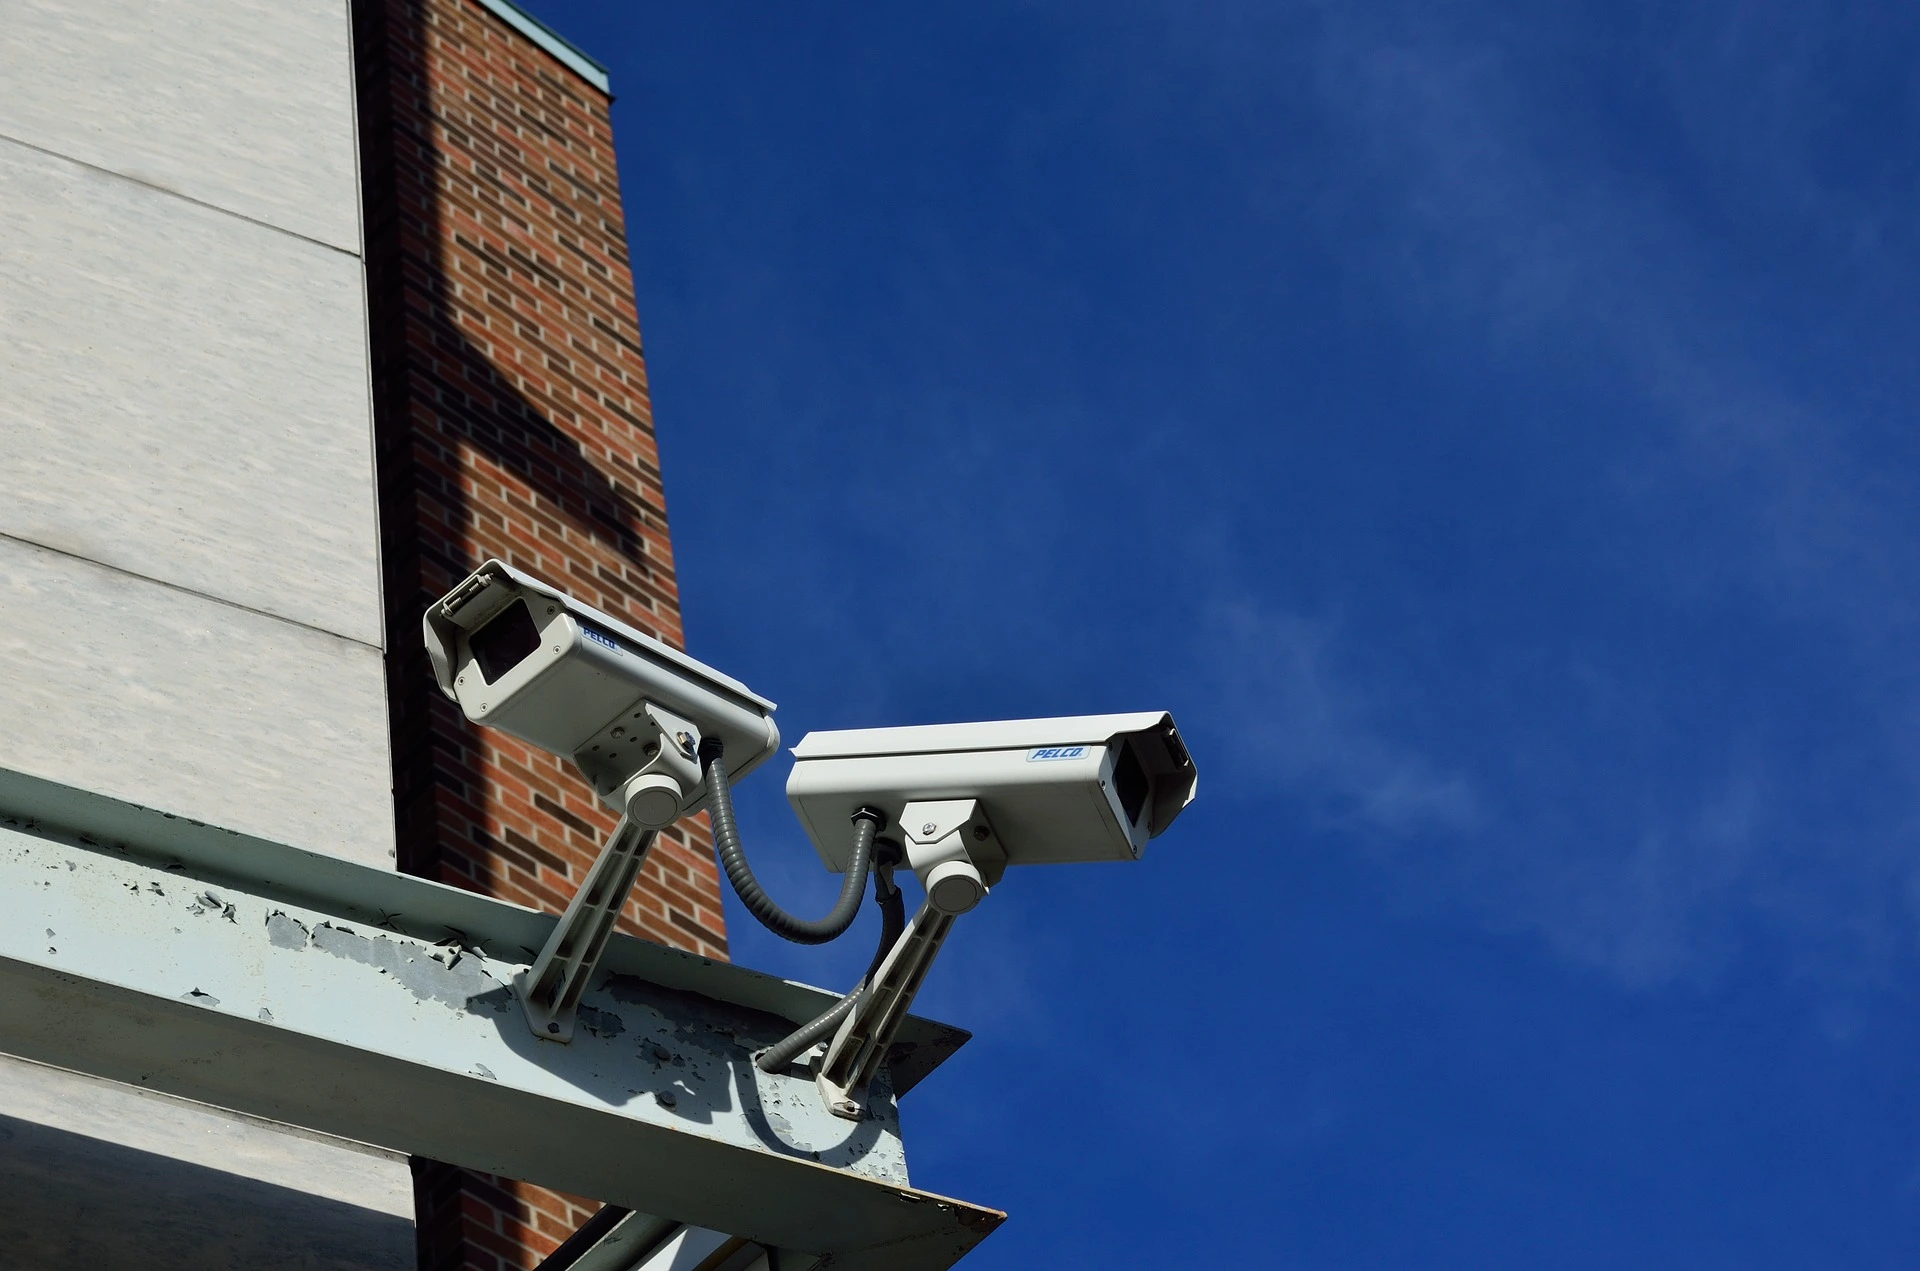 5 Reasons Why You Should Consider an Avigilon CCTV System